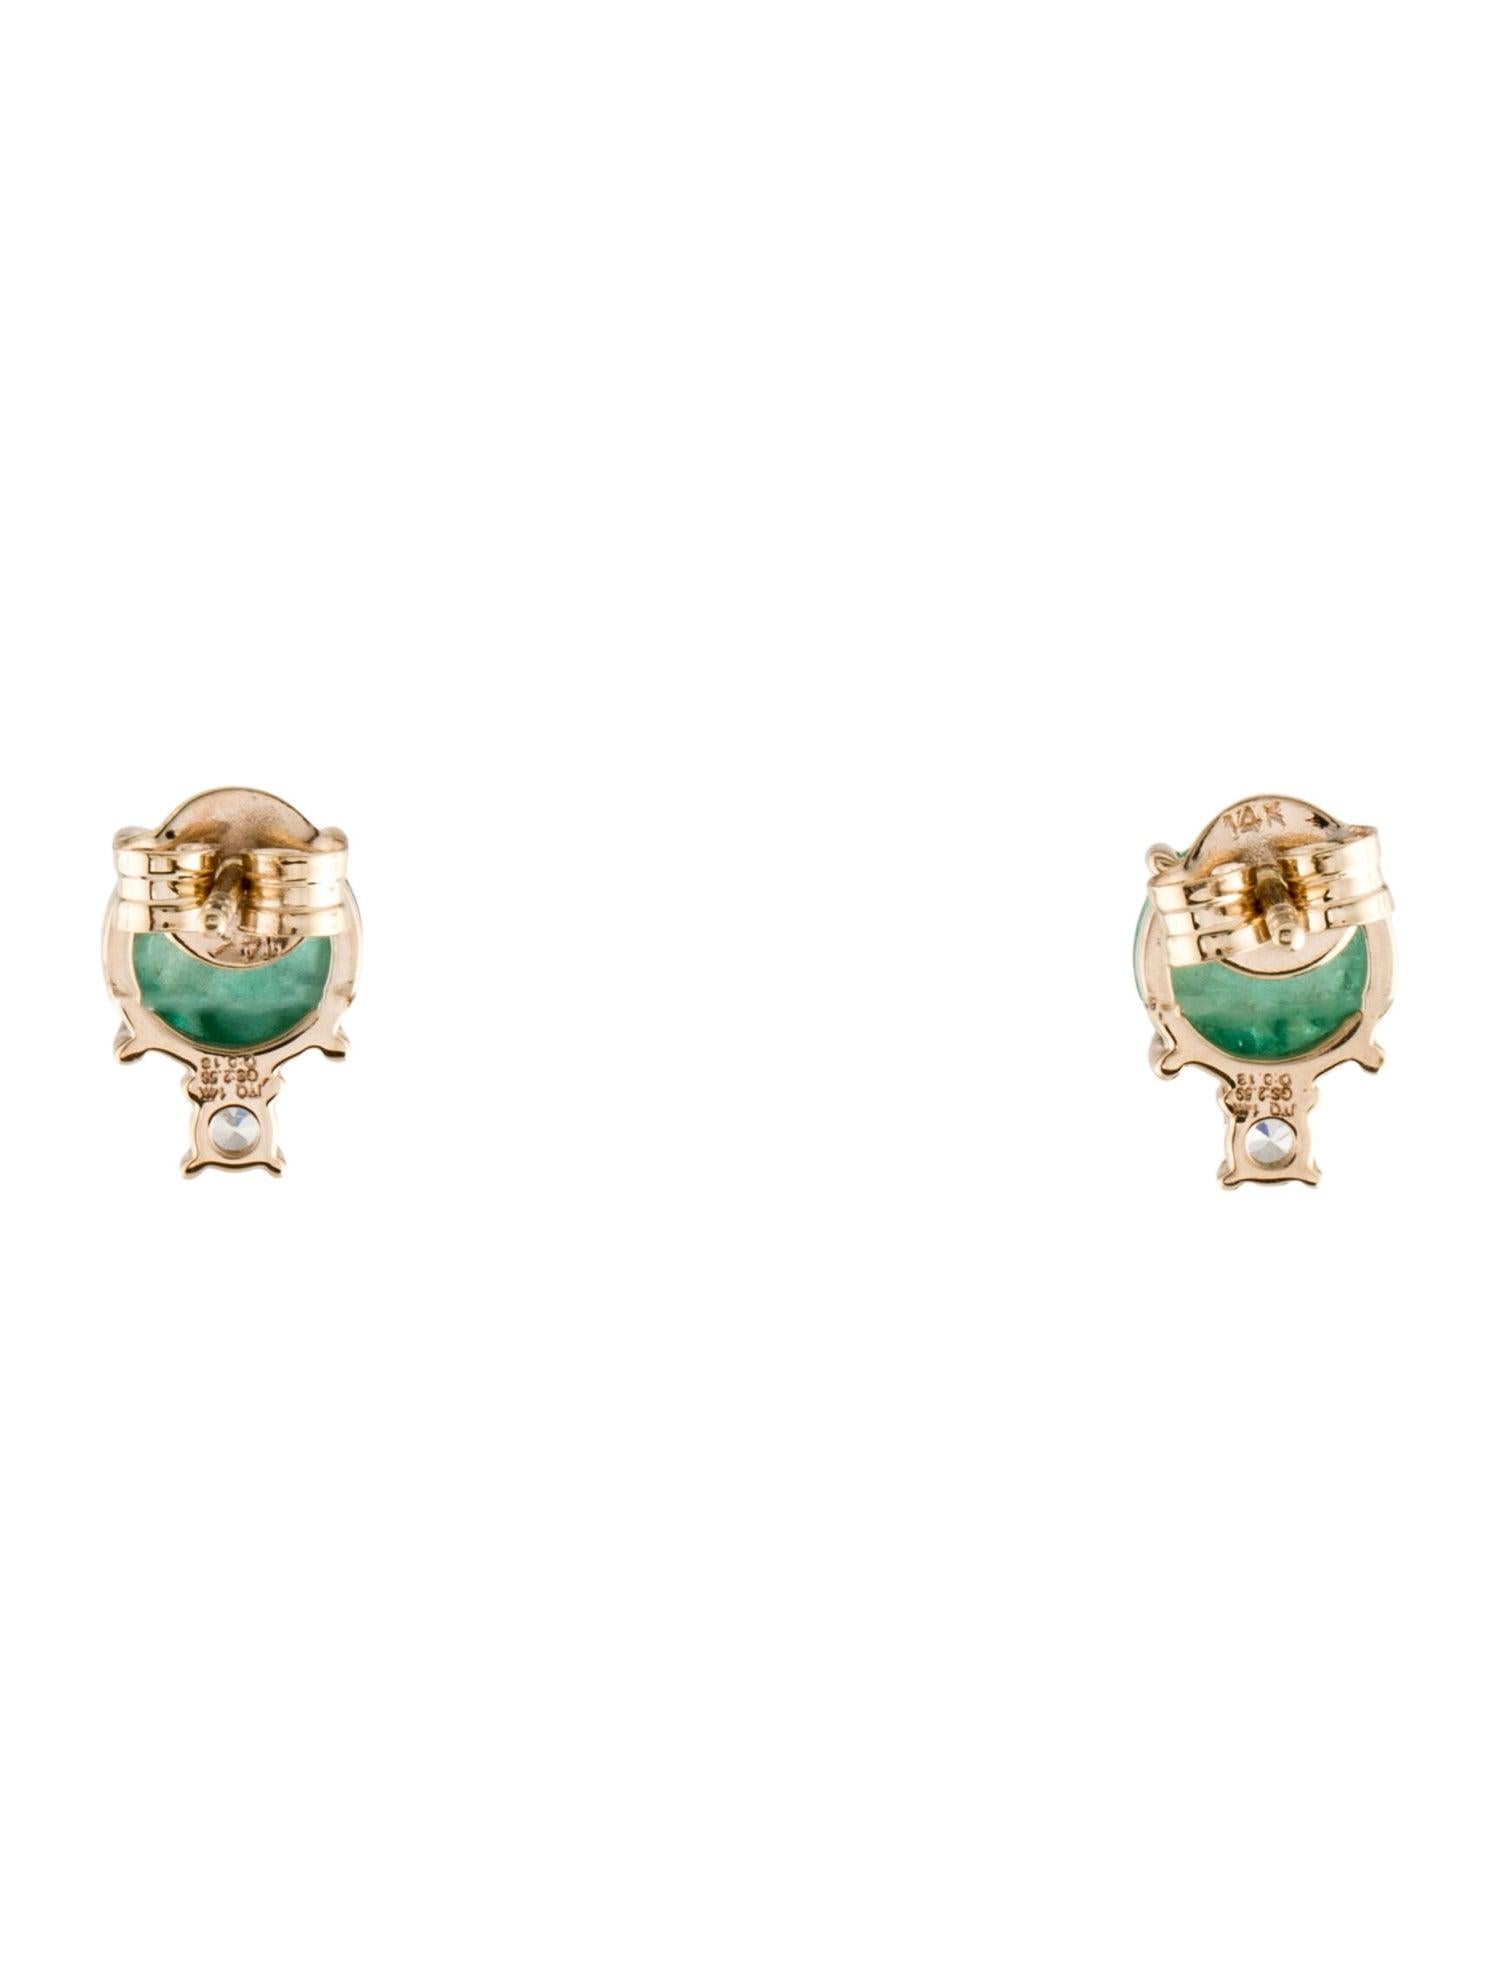 Women's Stunning 14K Emerald & Diamond Stud Earrings - Classic Elegance Jewelry For Sale